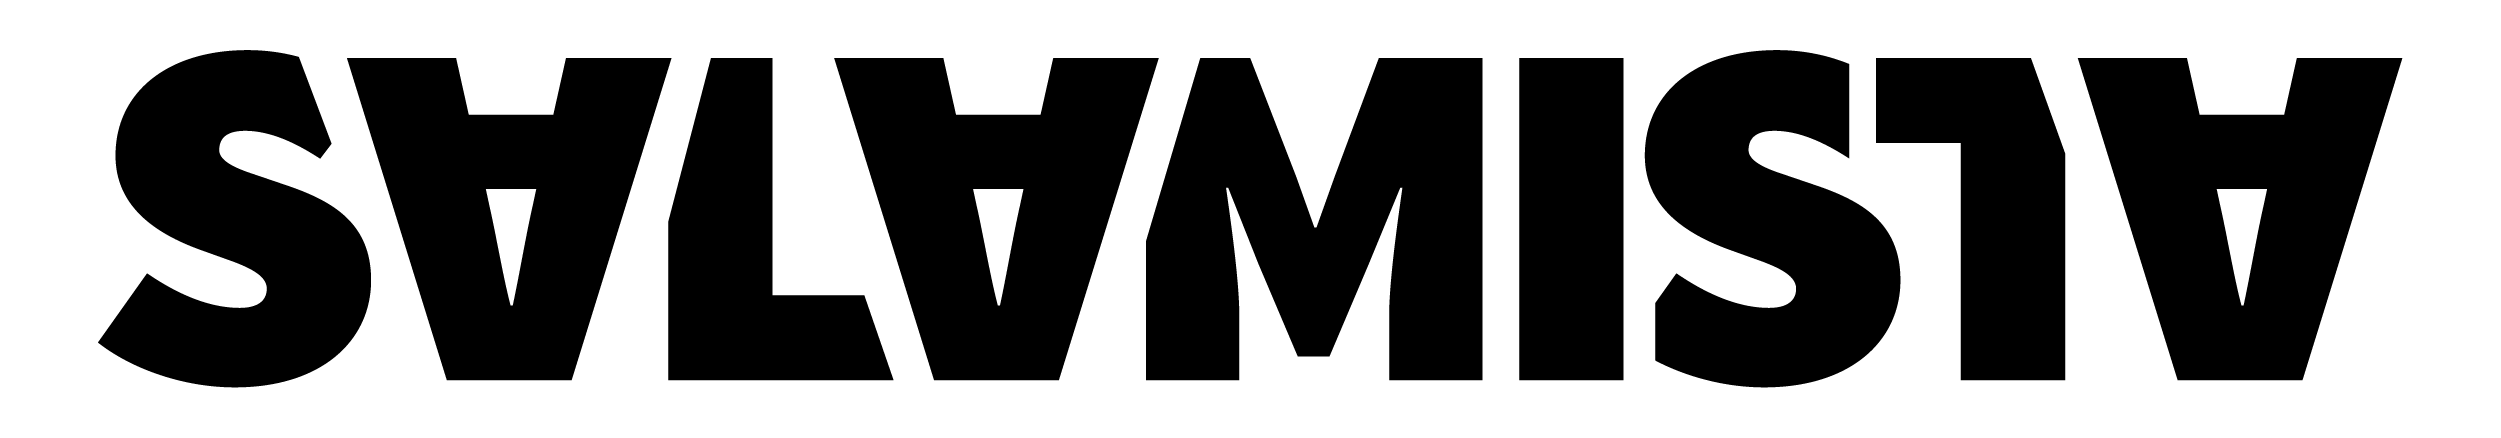 SALAMISTA-logo_Kreslicí plátno 1 kopie